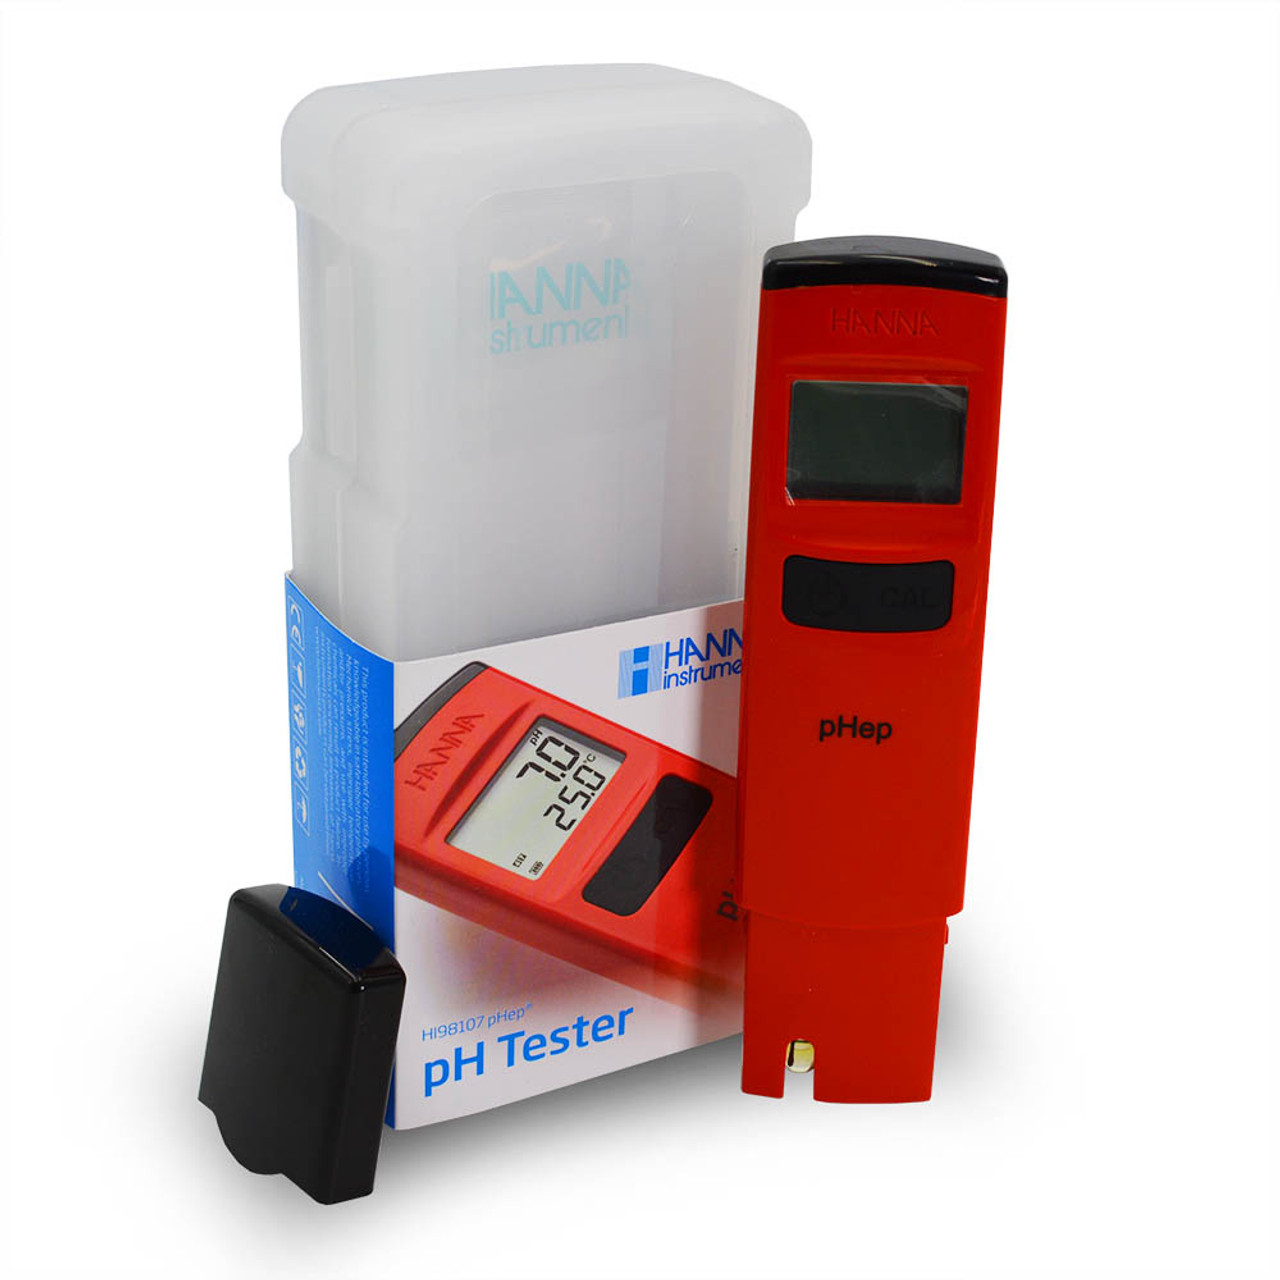 Top-Verkaufstipp Waterproof Pocket pH Tester Resolution Instruments - - 0.1 Hanna (HI98107) with pHep®